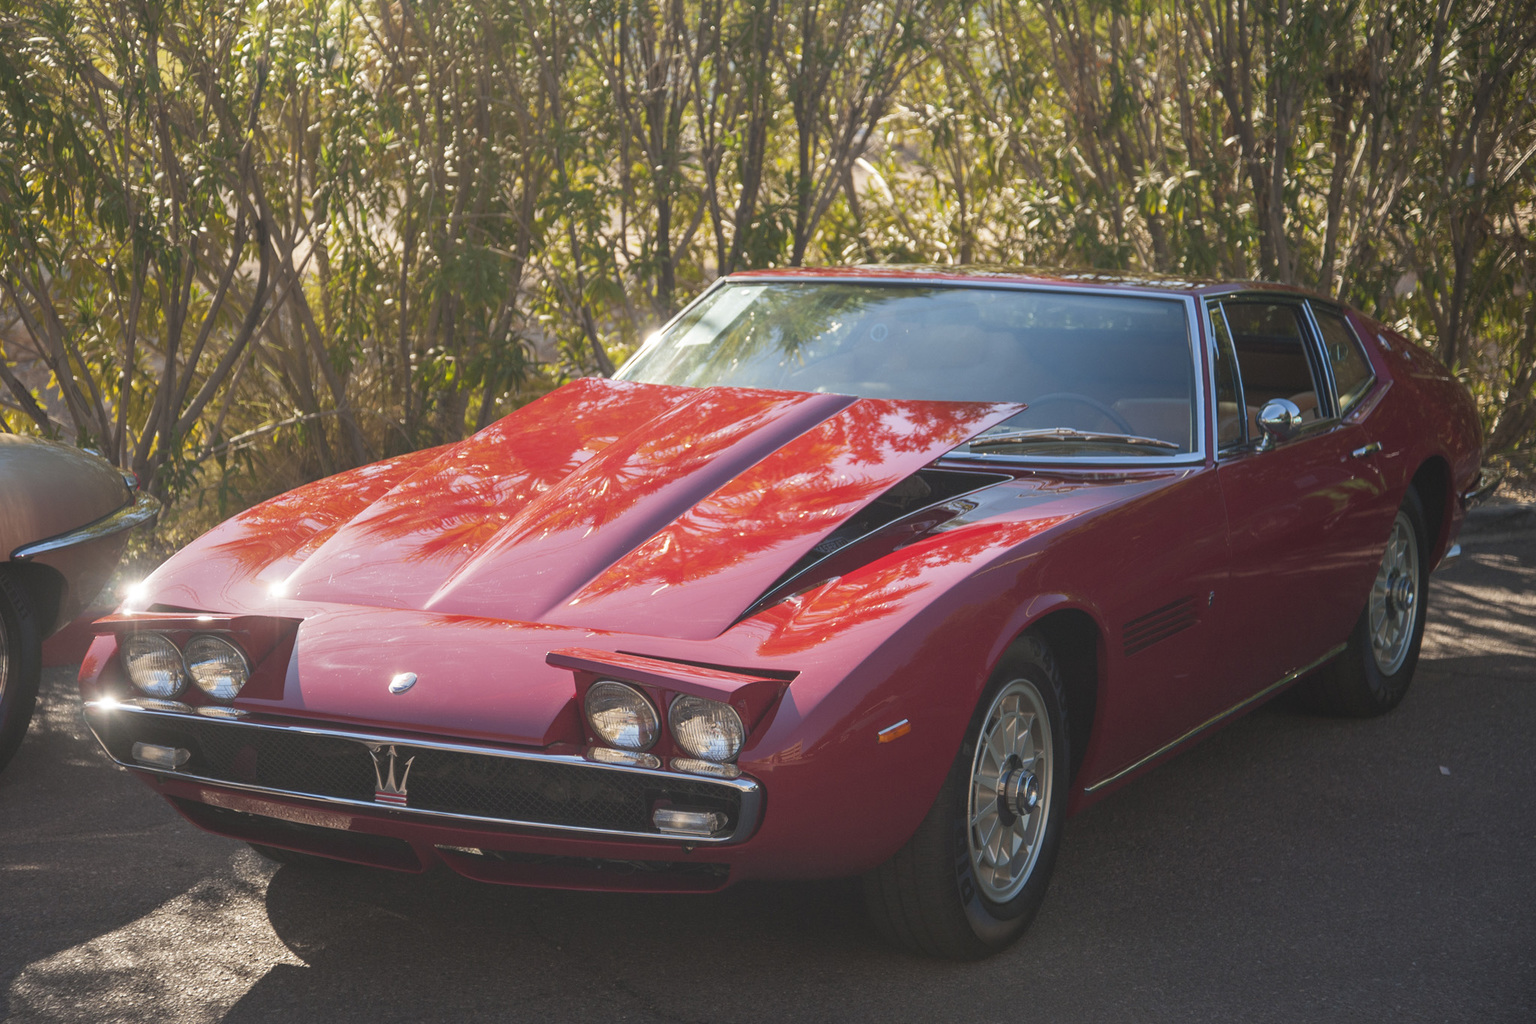 1967→1970 Maserati Ghibli